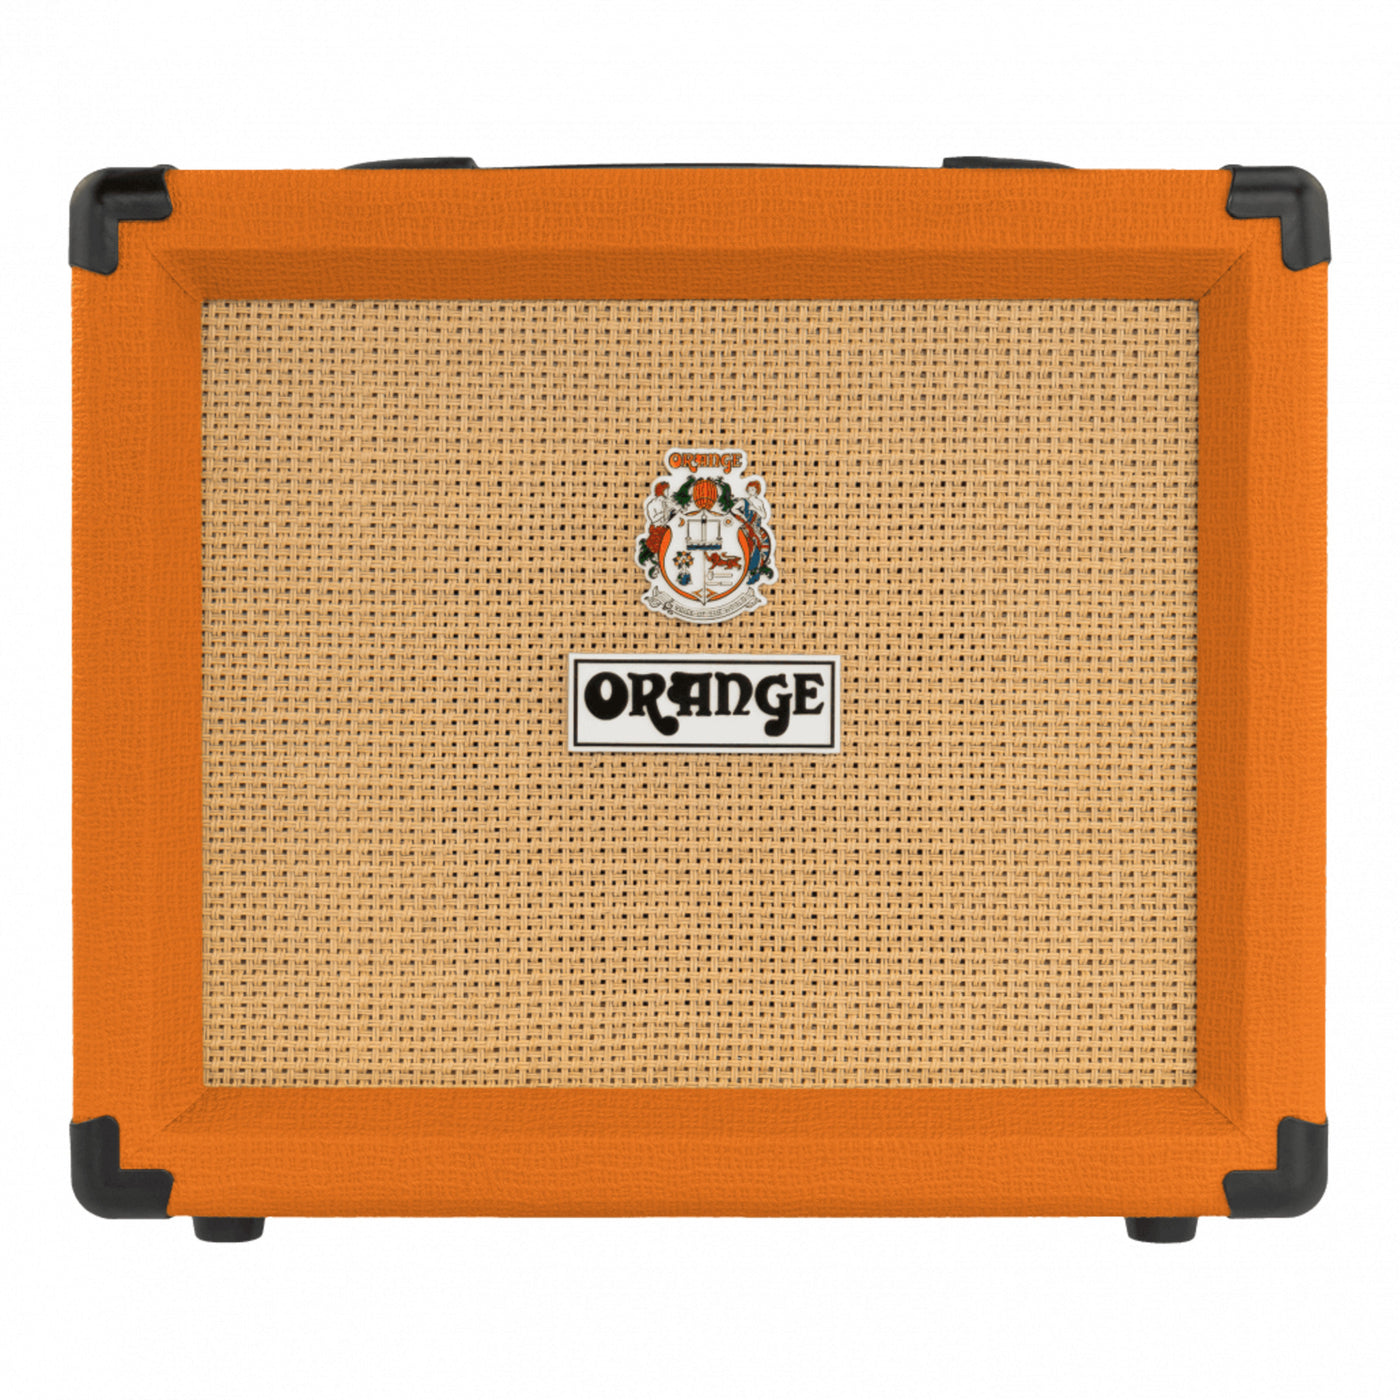 Orange Amps Crush 20RT, Twin Channel, All-Analog, 20-Watt Amplifier - CRUSH20RTBlack